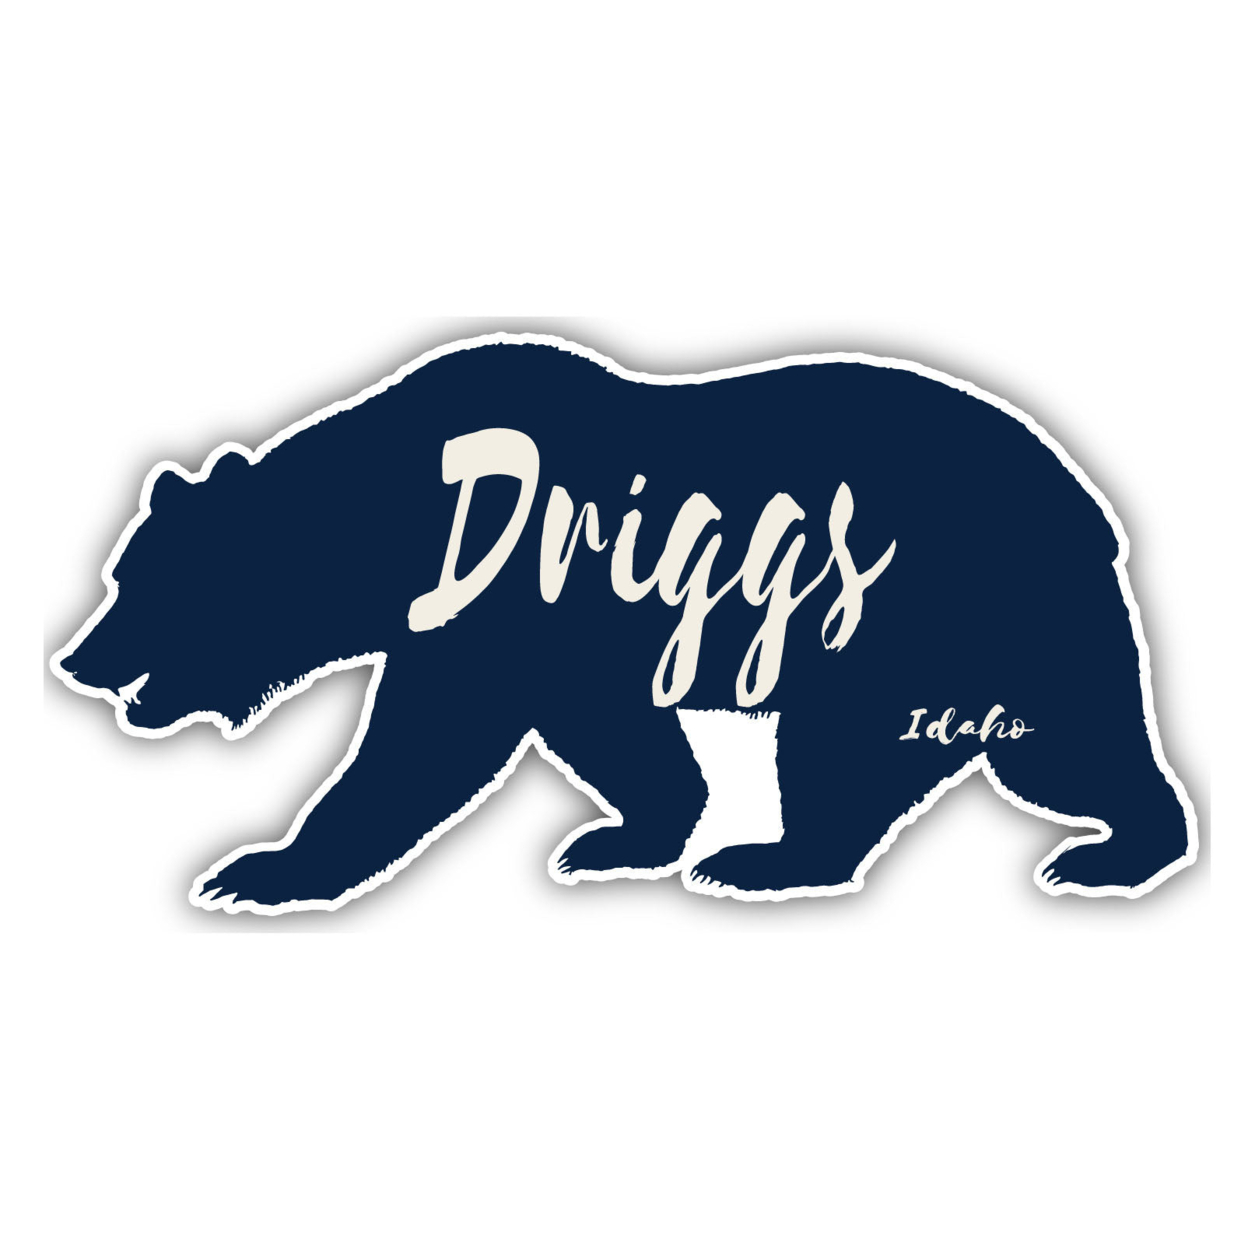 Driggs Idaho Souvenir Decorative Stickers (Choose Theme And Size) - Single Unit, 6-Inch, Adventures Awaits